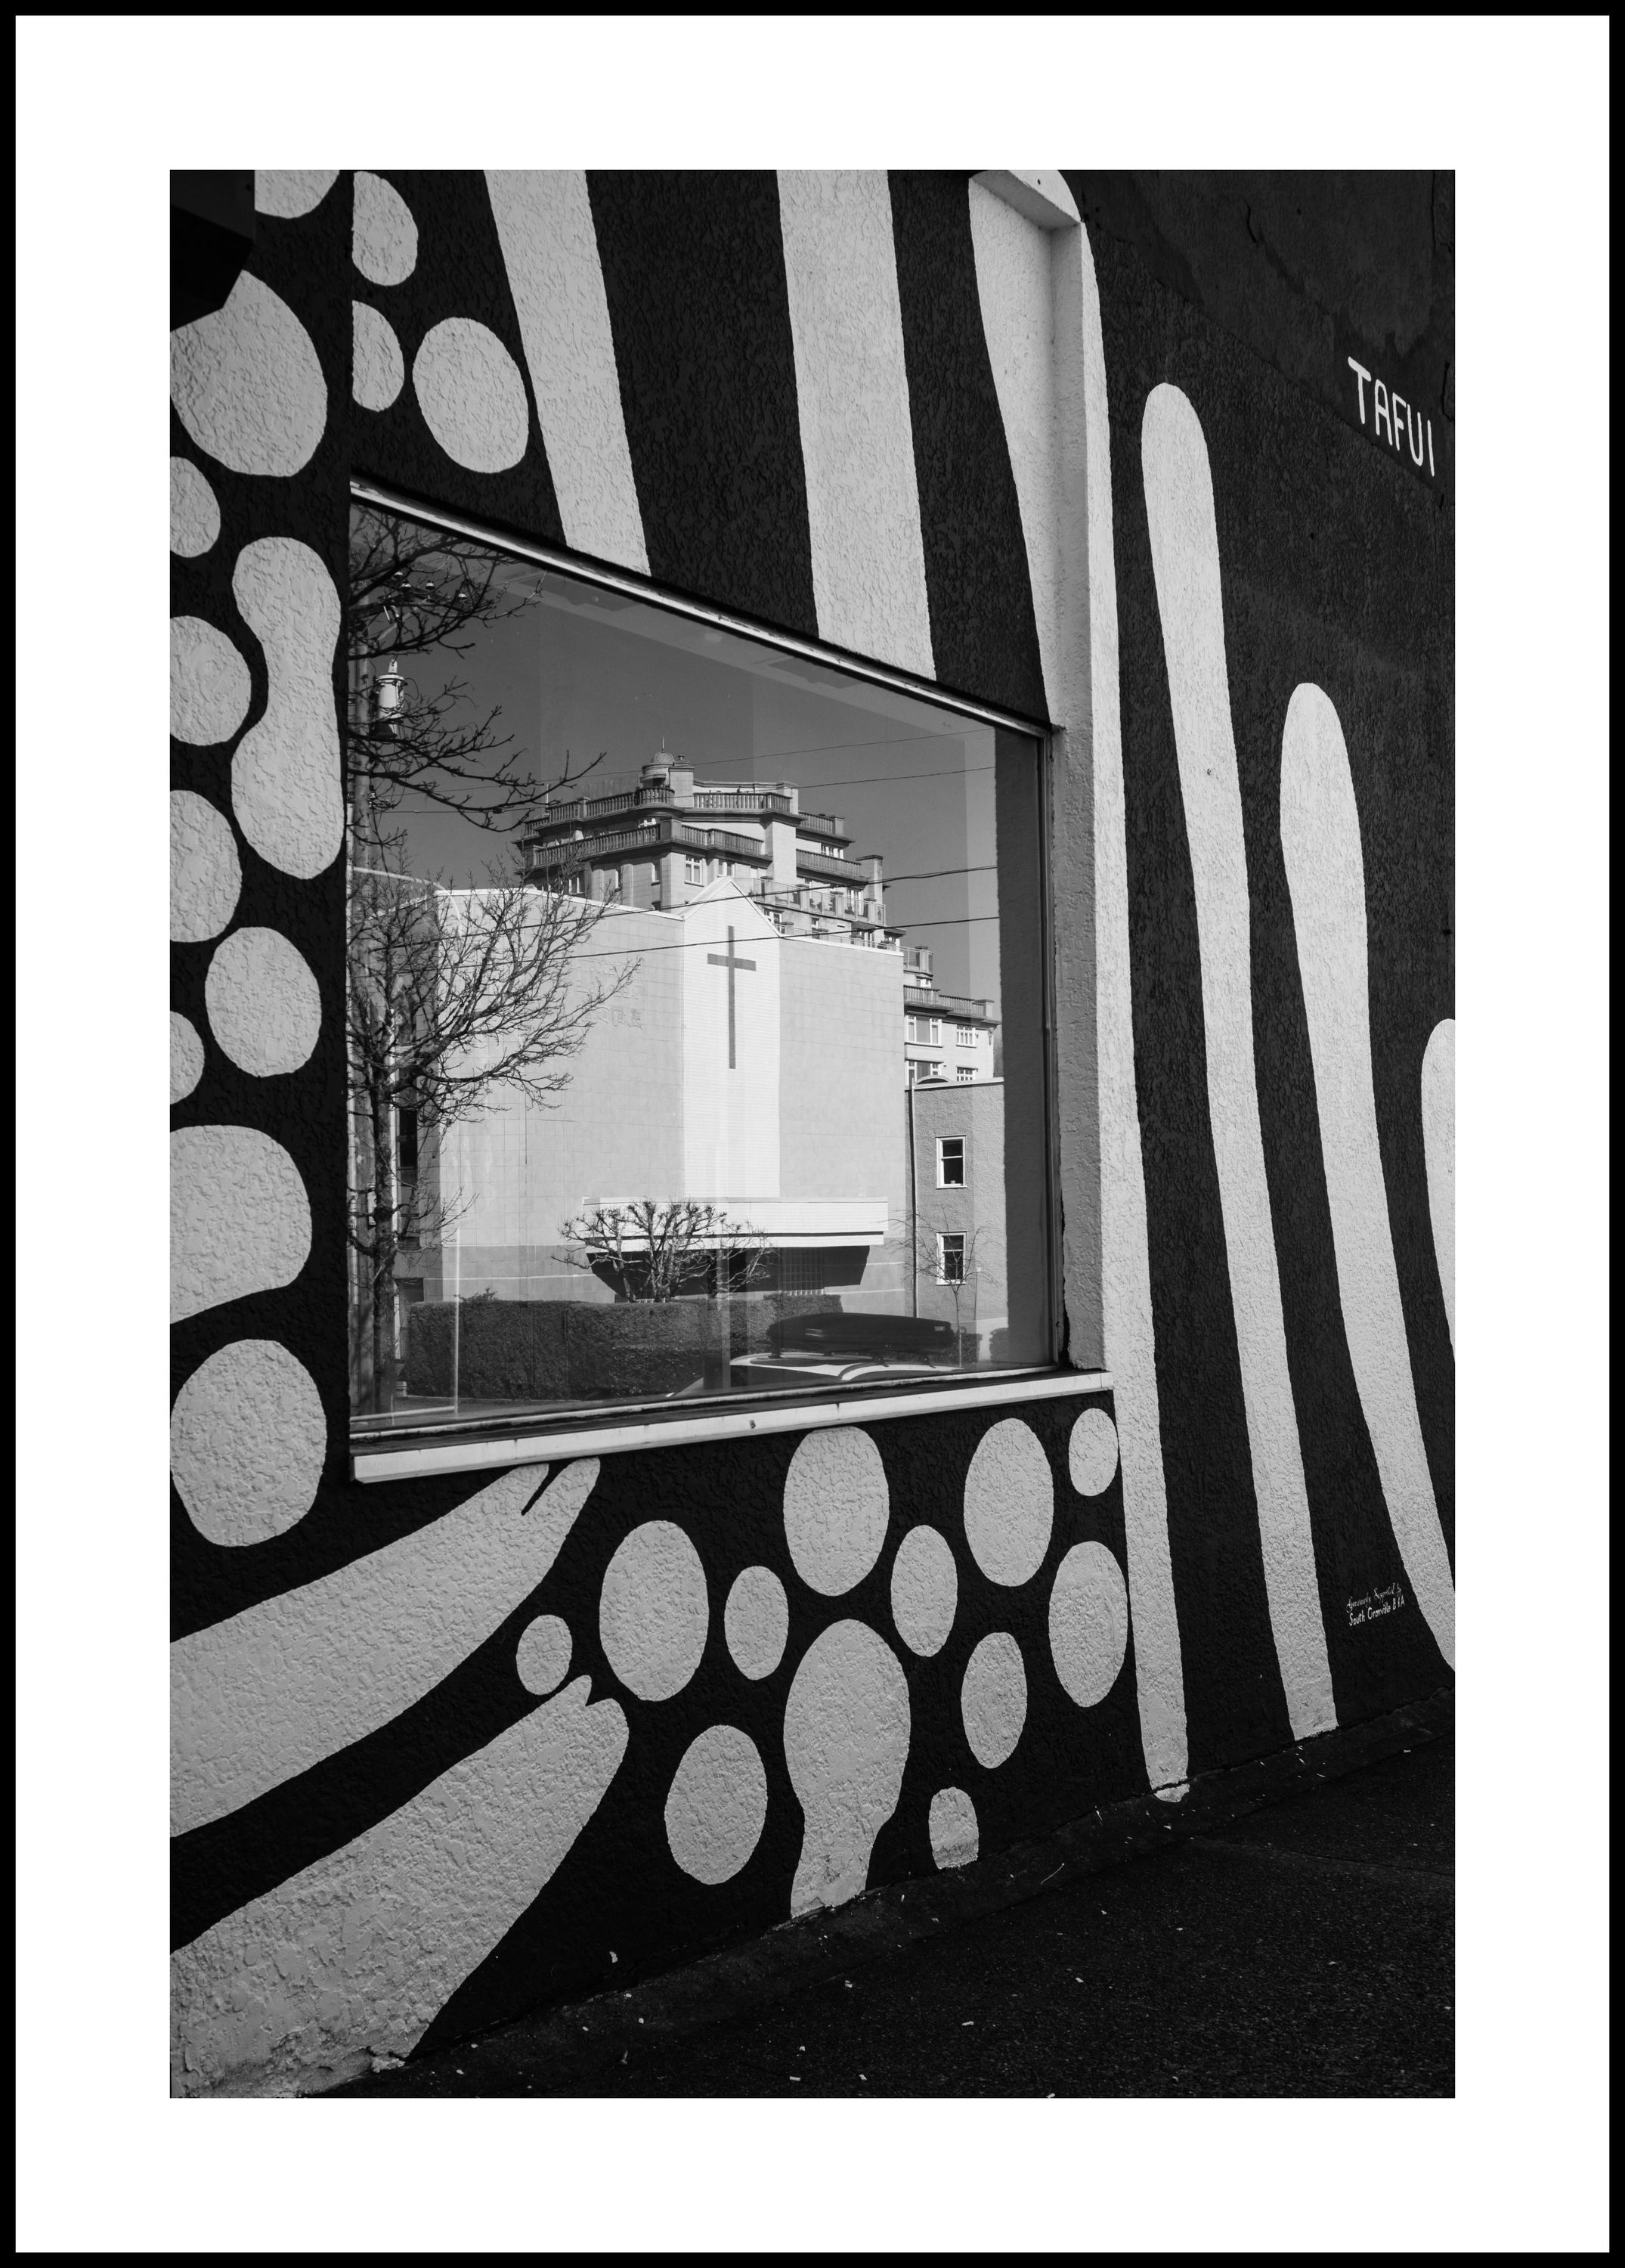 Tafui & Reflection - Leica M10, Voigtlander 35mm f2.5 Color Skopar